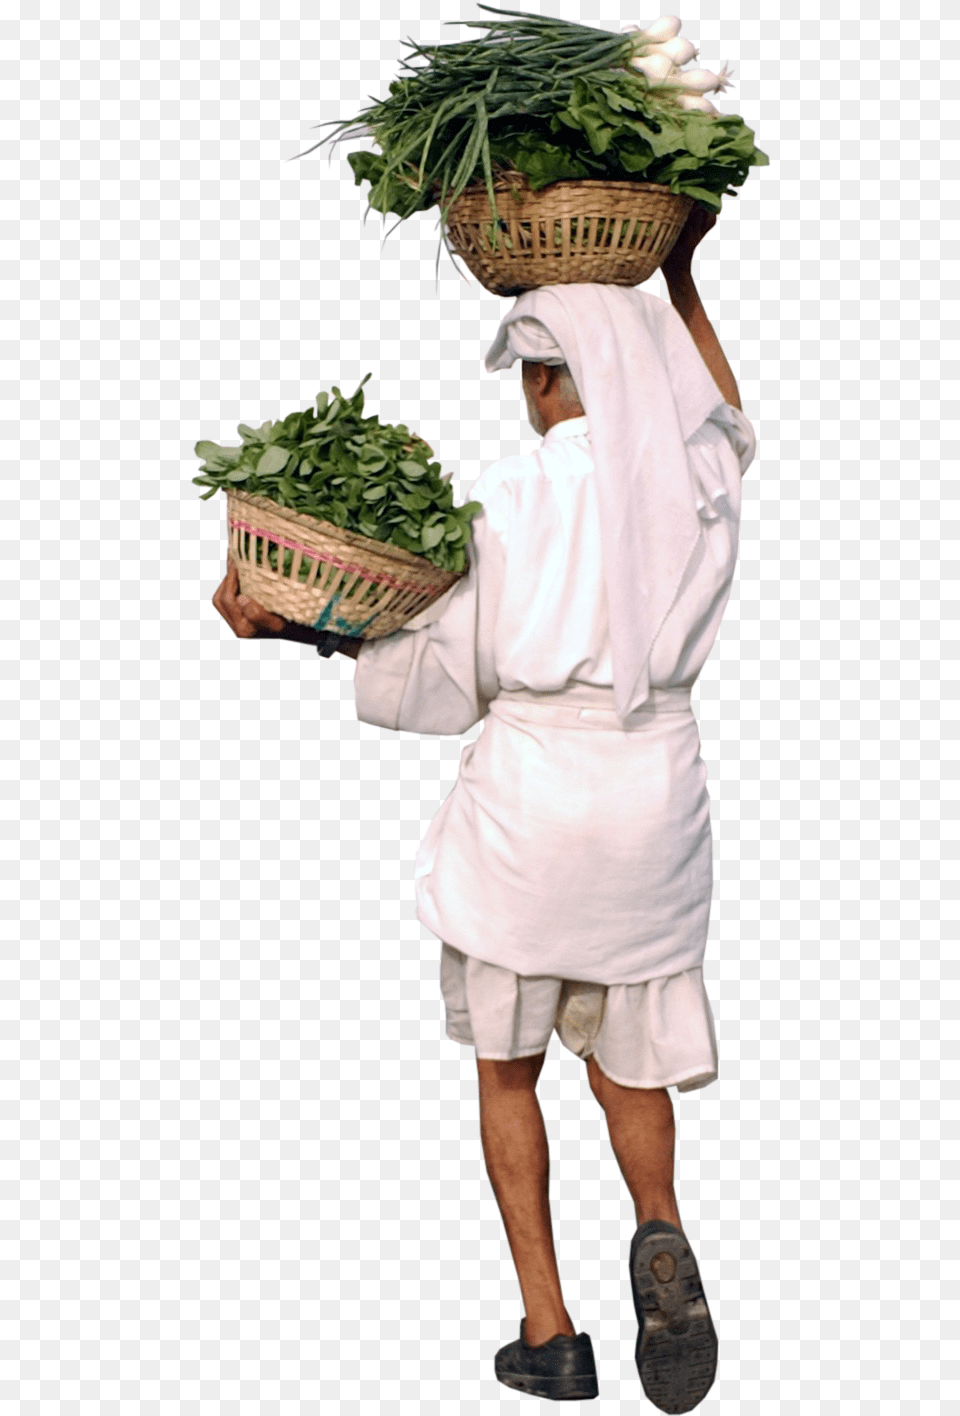 Indian Human Figures, Herbs, Plant, Leaf, Herbal Free Png Download